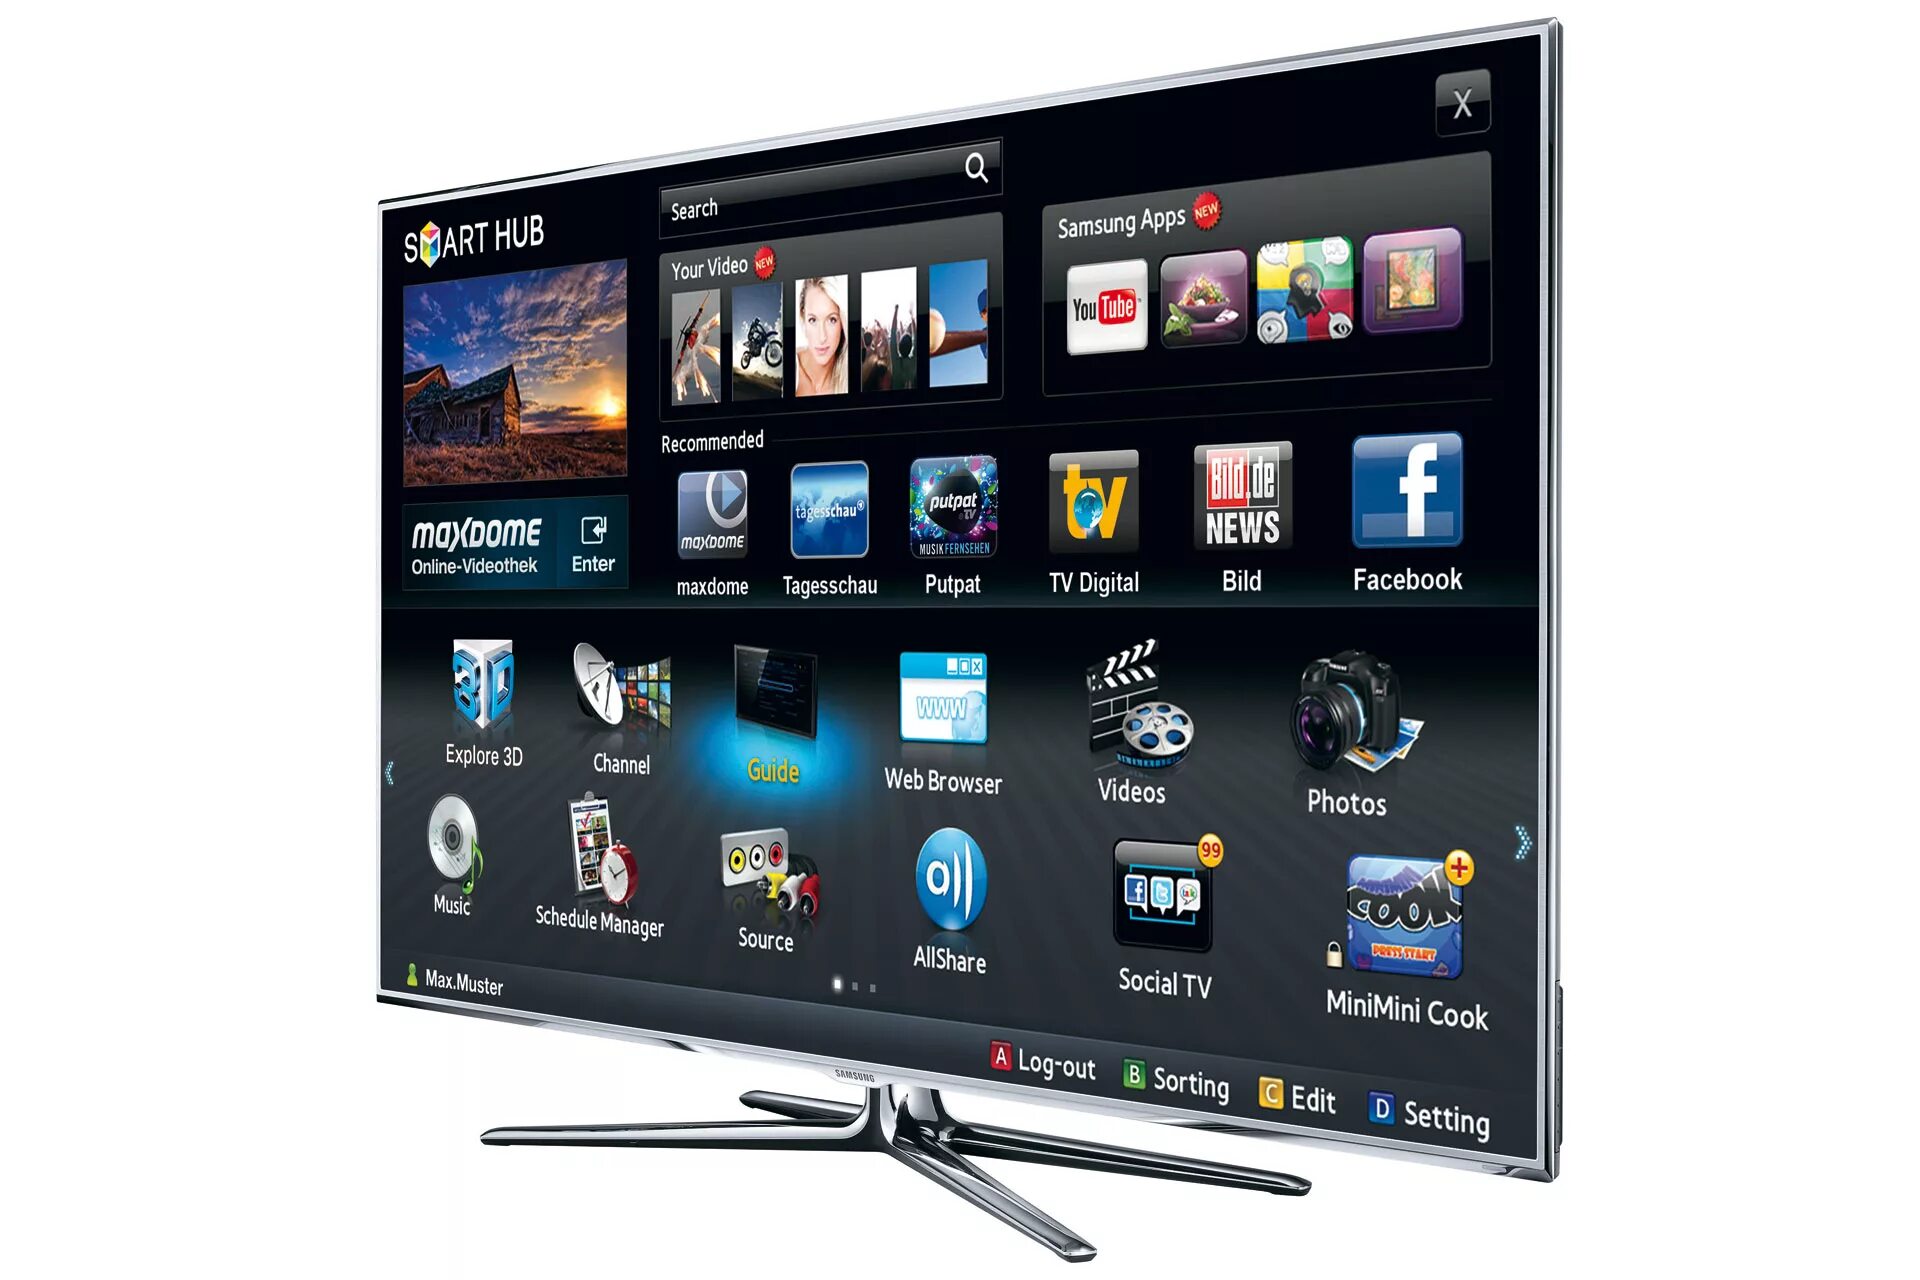 Смарт ТВ самсунг смарт Hub. Телевизор Samsung Smart TV. Самсунг смарт ТВ 61 см. Телевизор Samsung Smart Hub 2011.